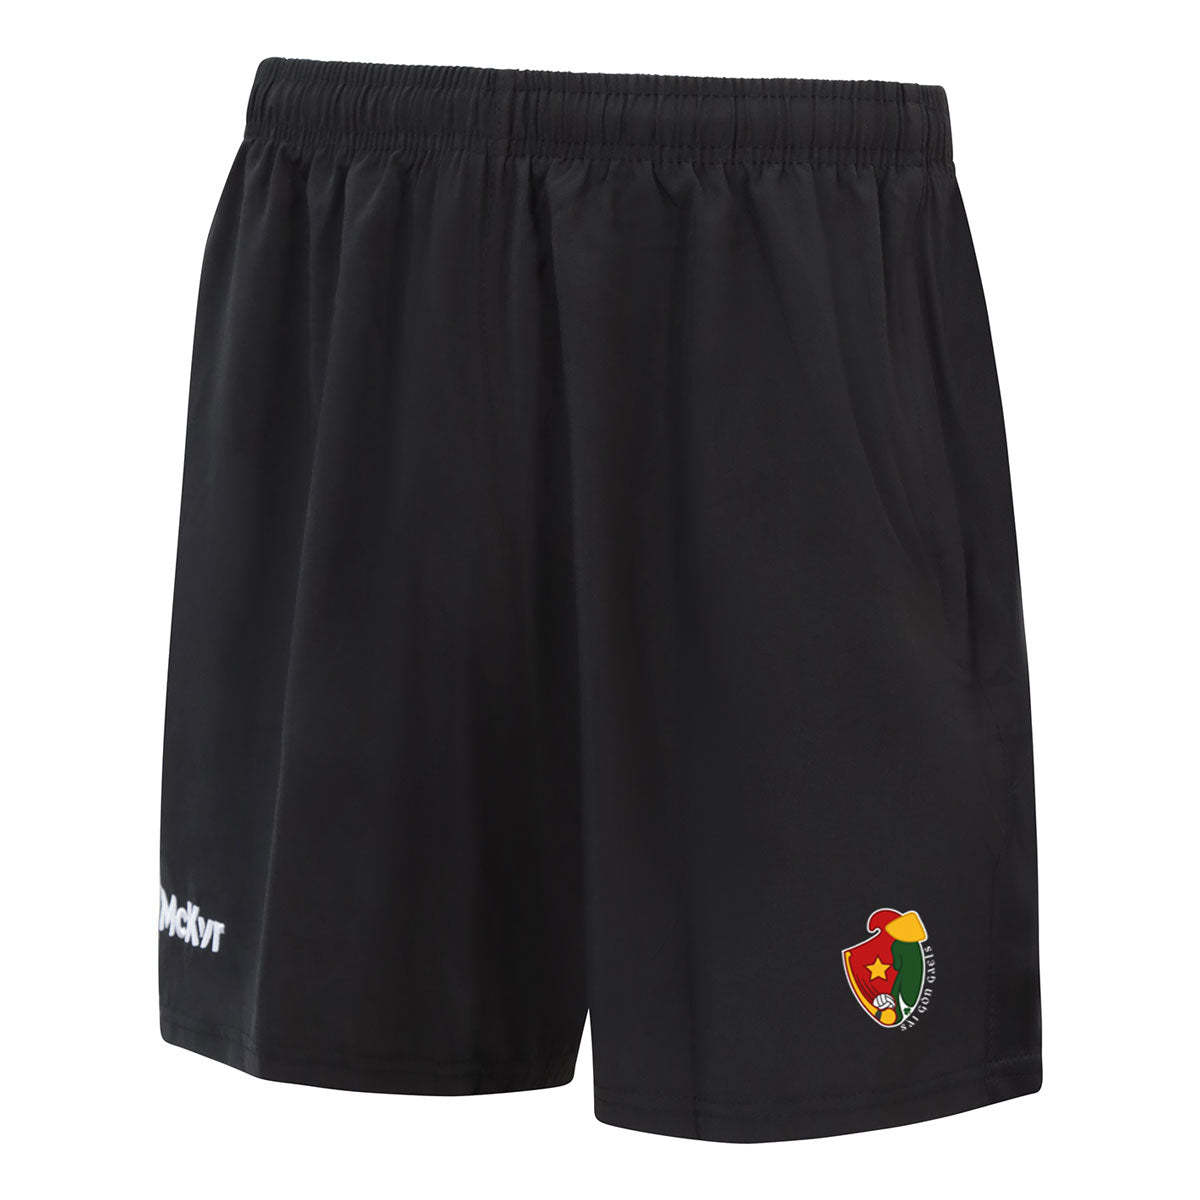 Mc Keever Saigon Gaels Core 22 Leisure Shorts - Adult - Black